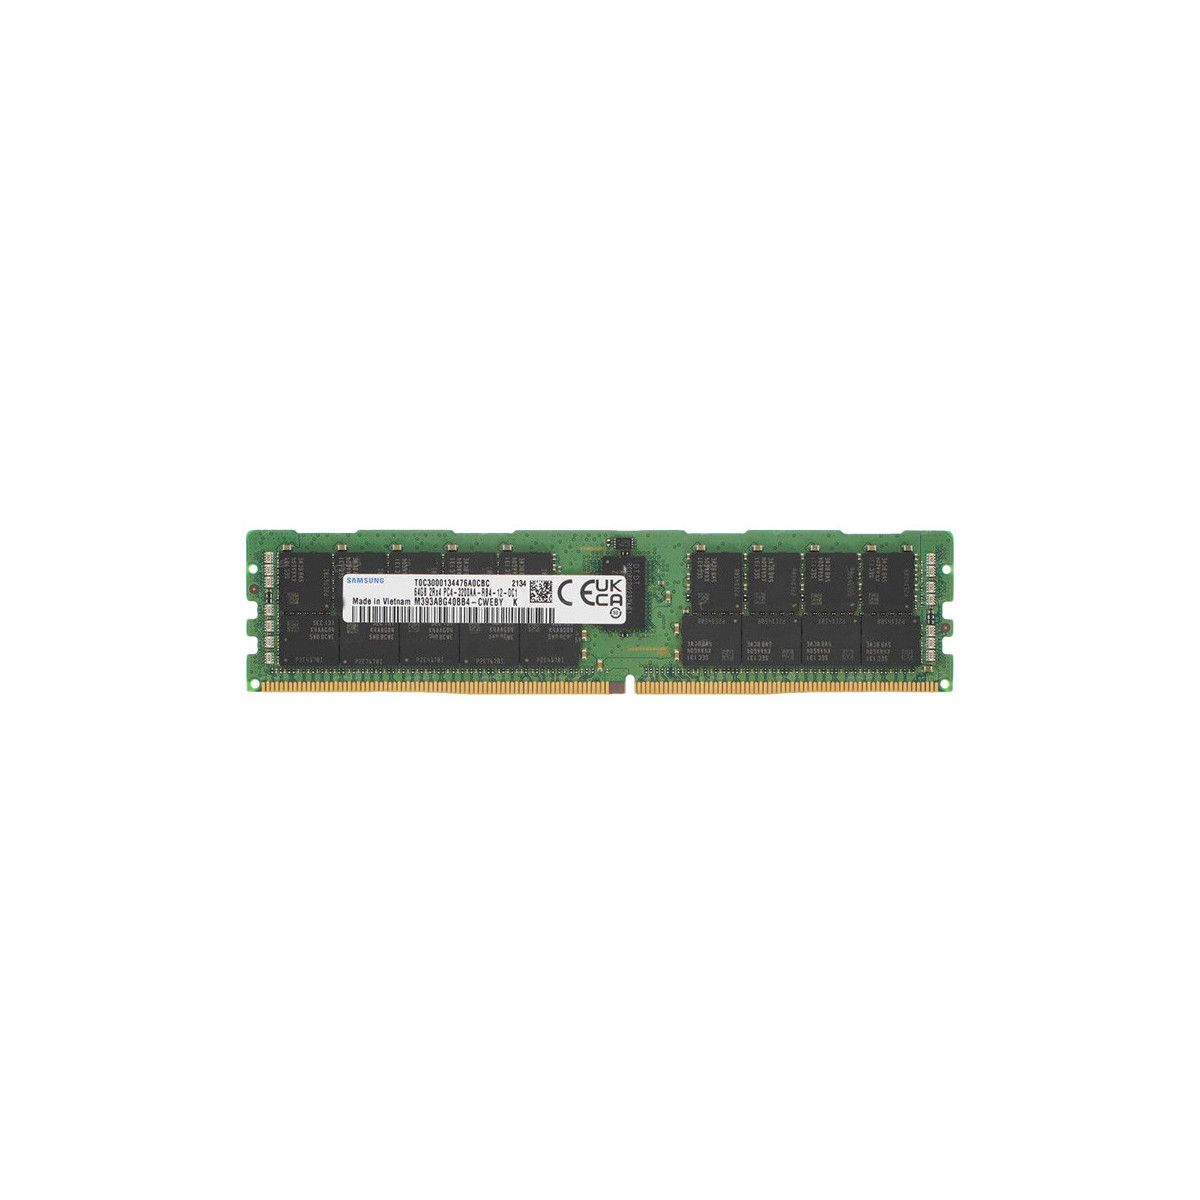 AB214253-MS - Memstar 1x 64GB DDR4-3200 RDIMM PC4-25600R - OEM compatible con Mem-Star Memoria 1 - Memstar 